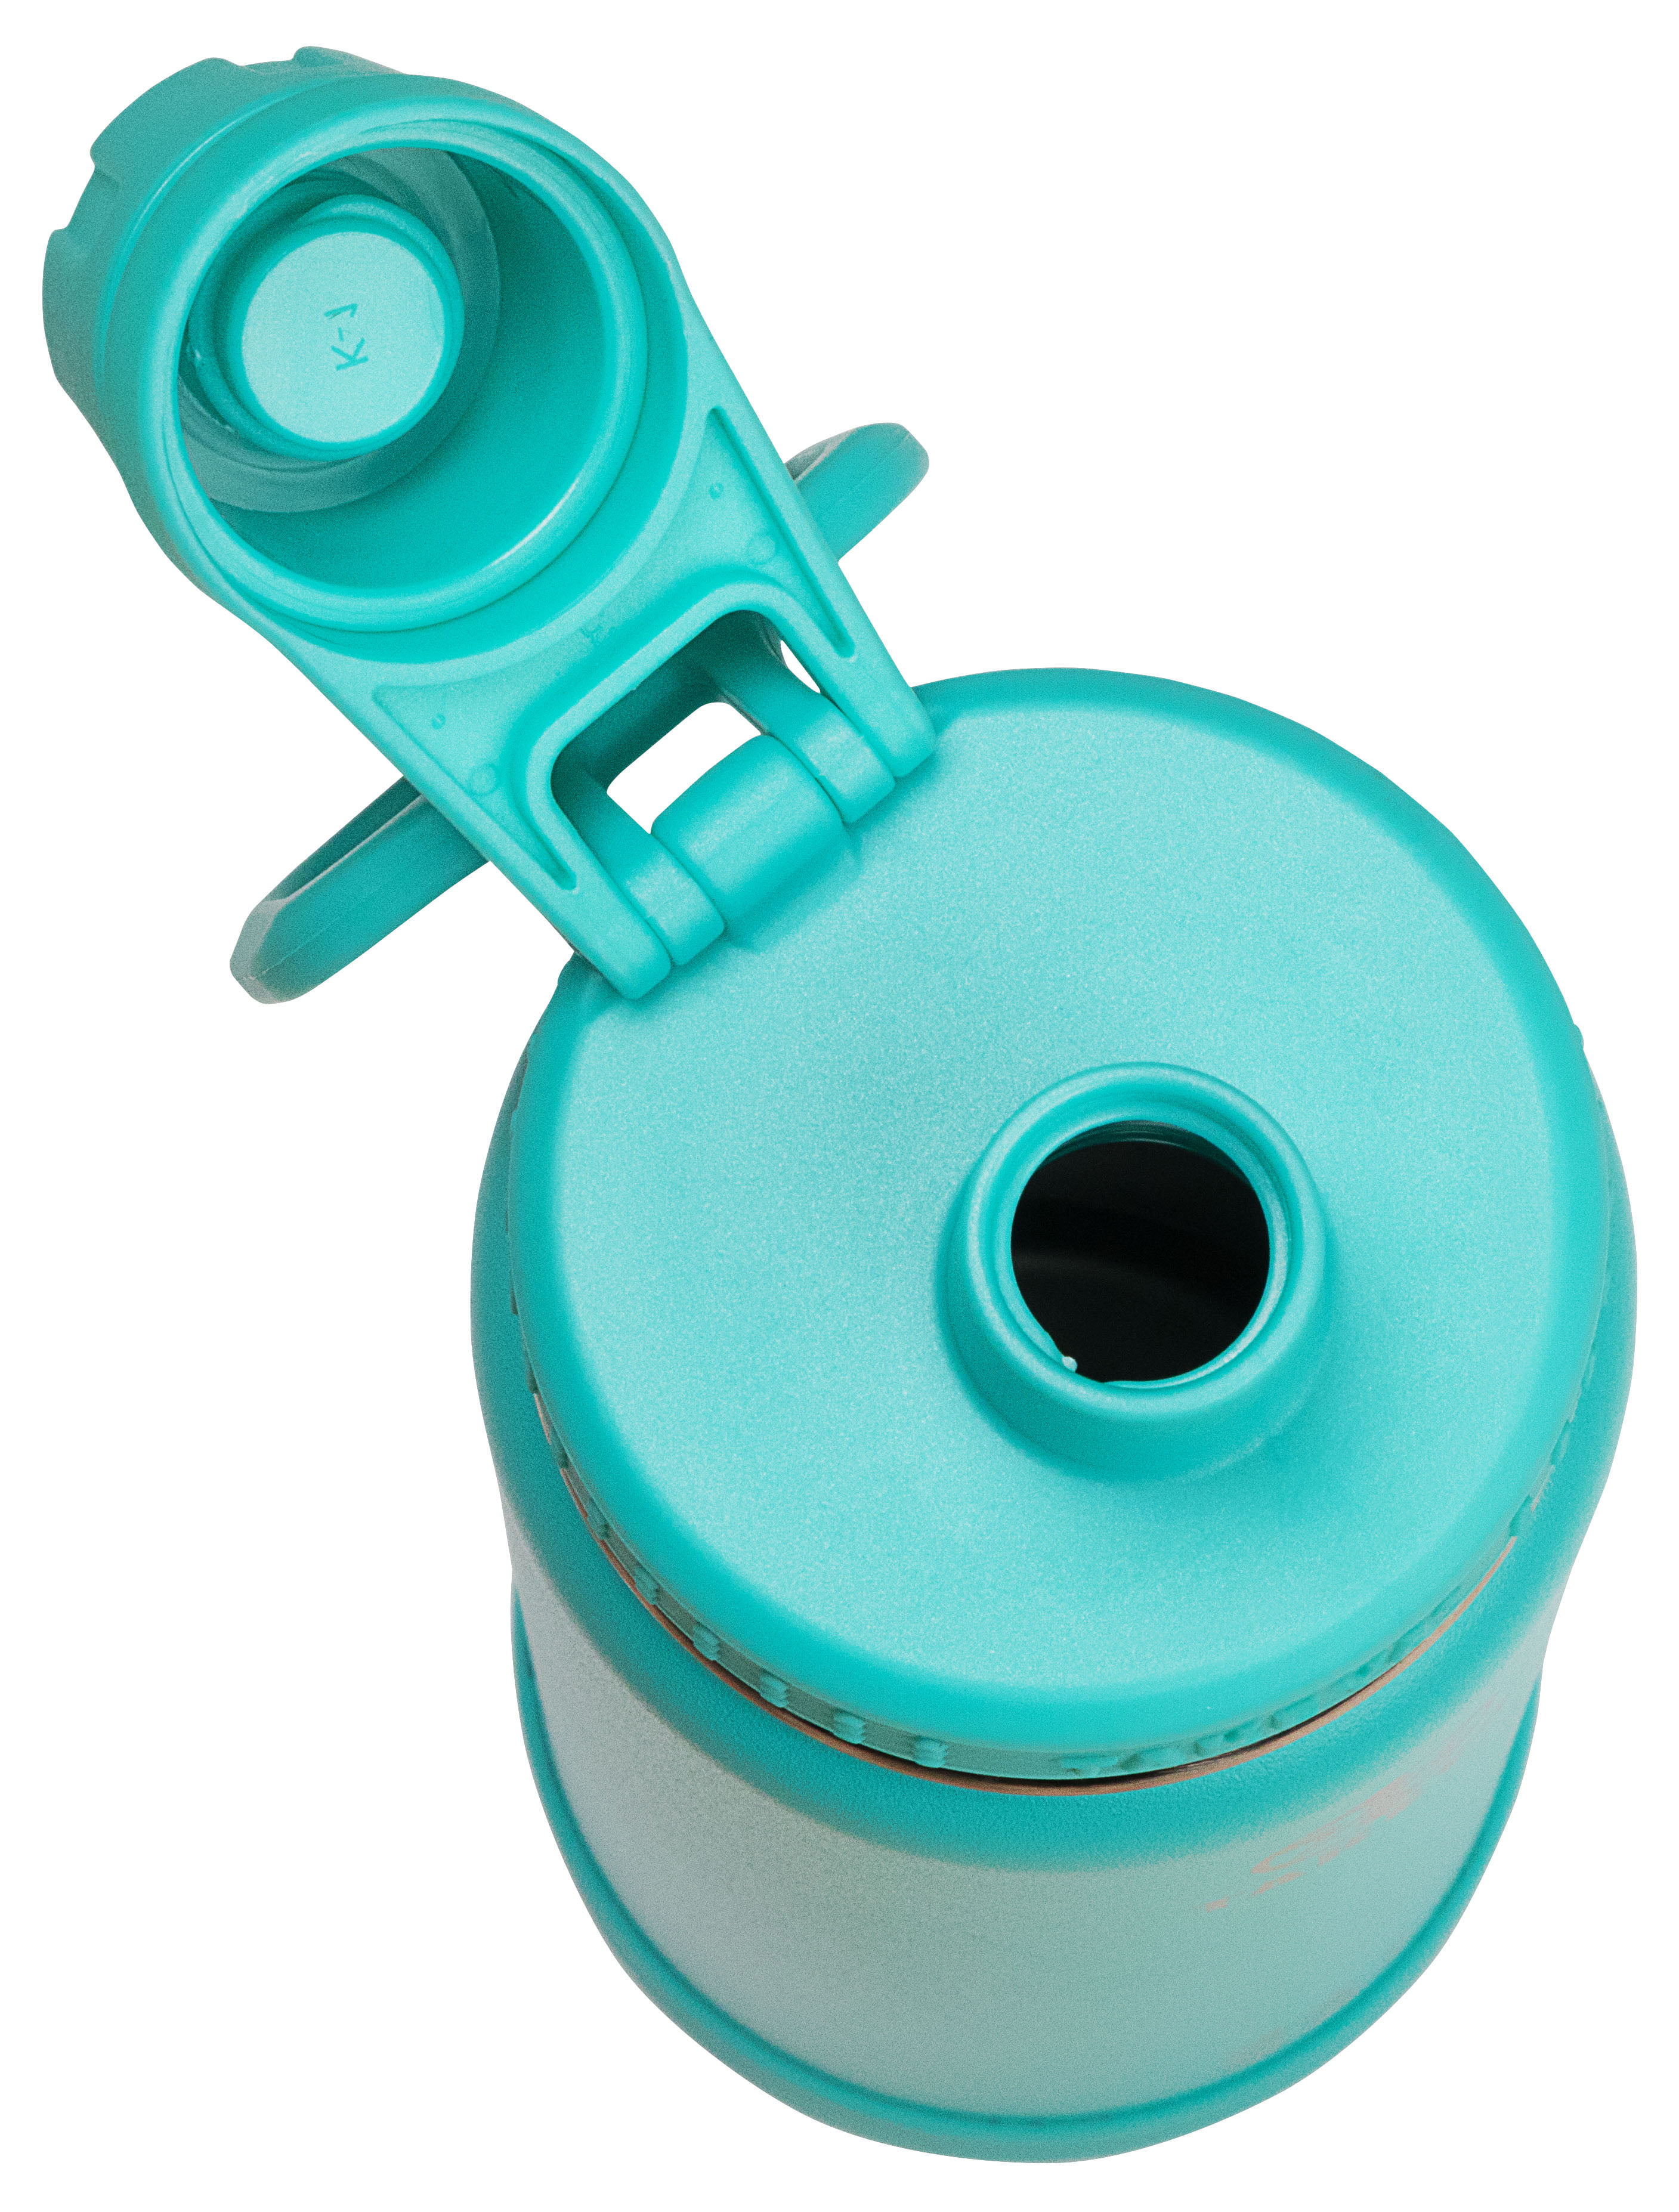 Takeya Actives Water Bottle Spout Lid 40 oz – Custom Branding